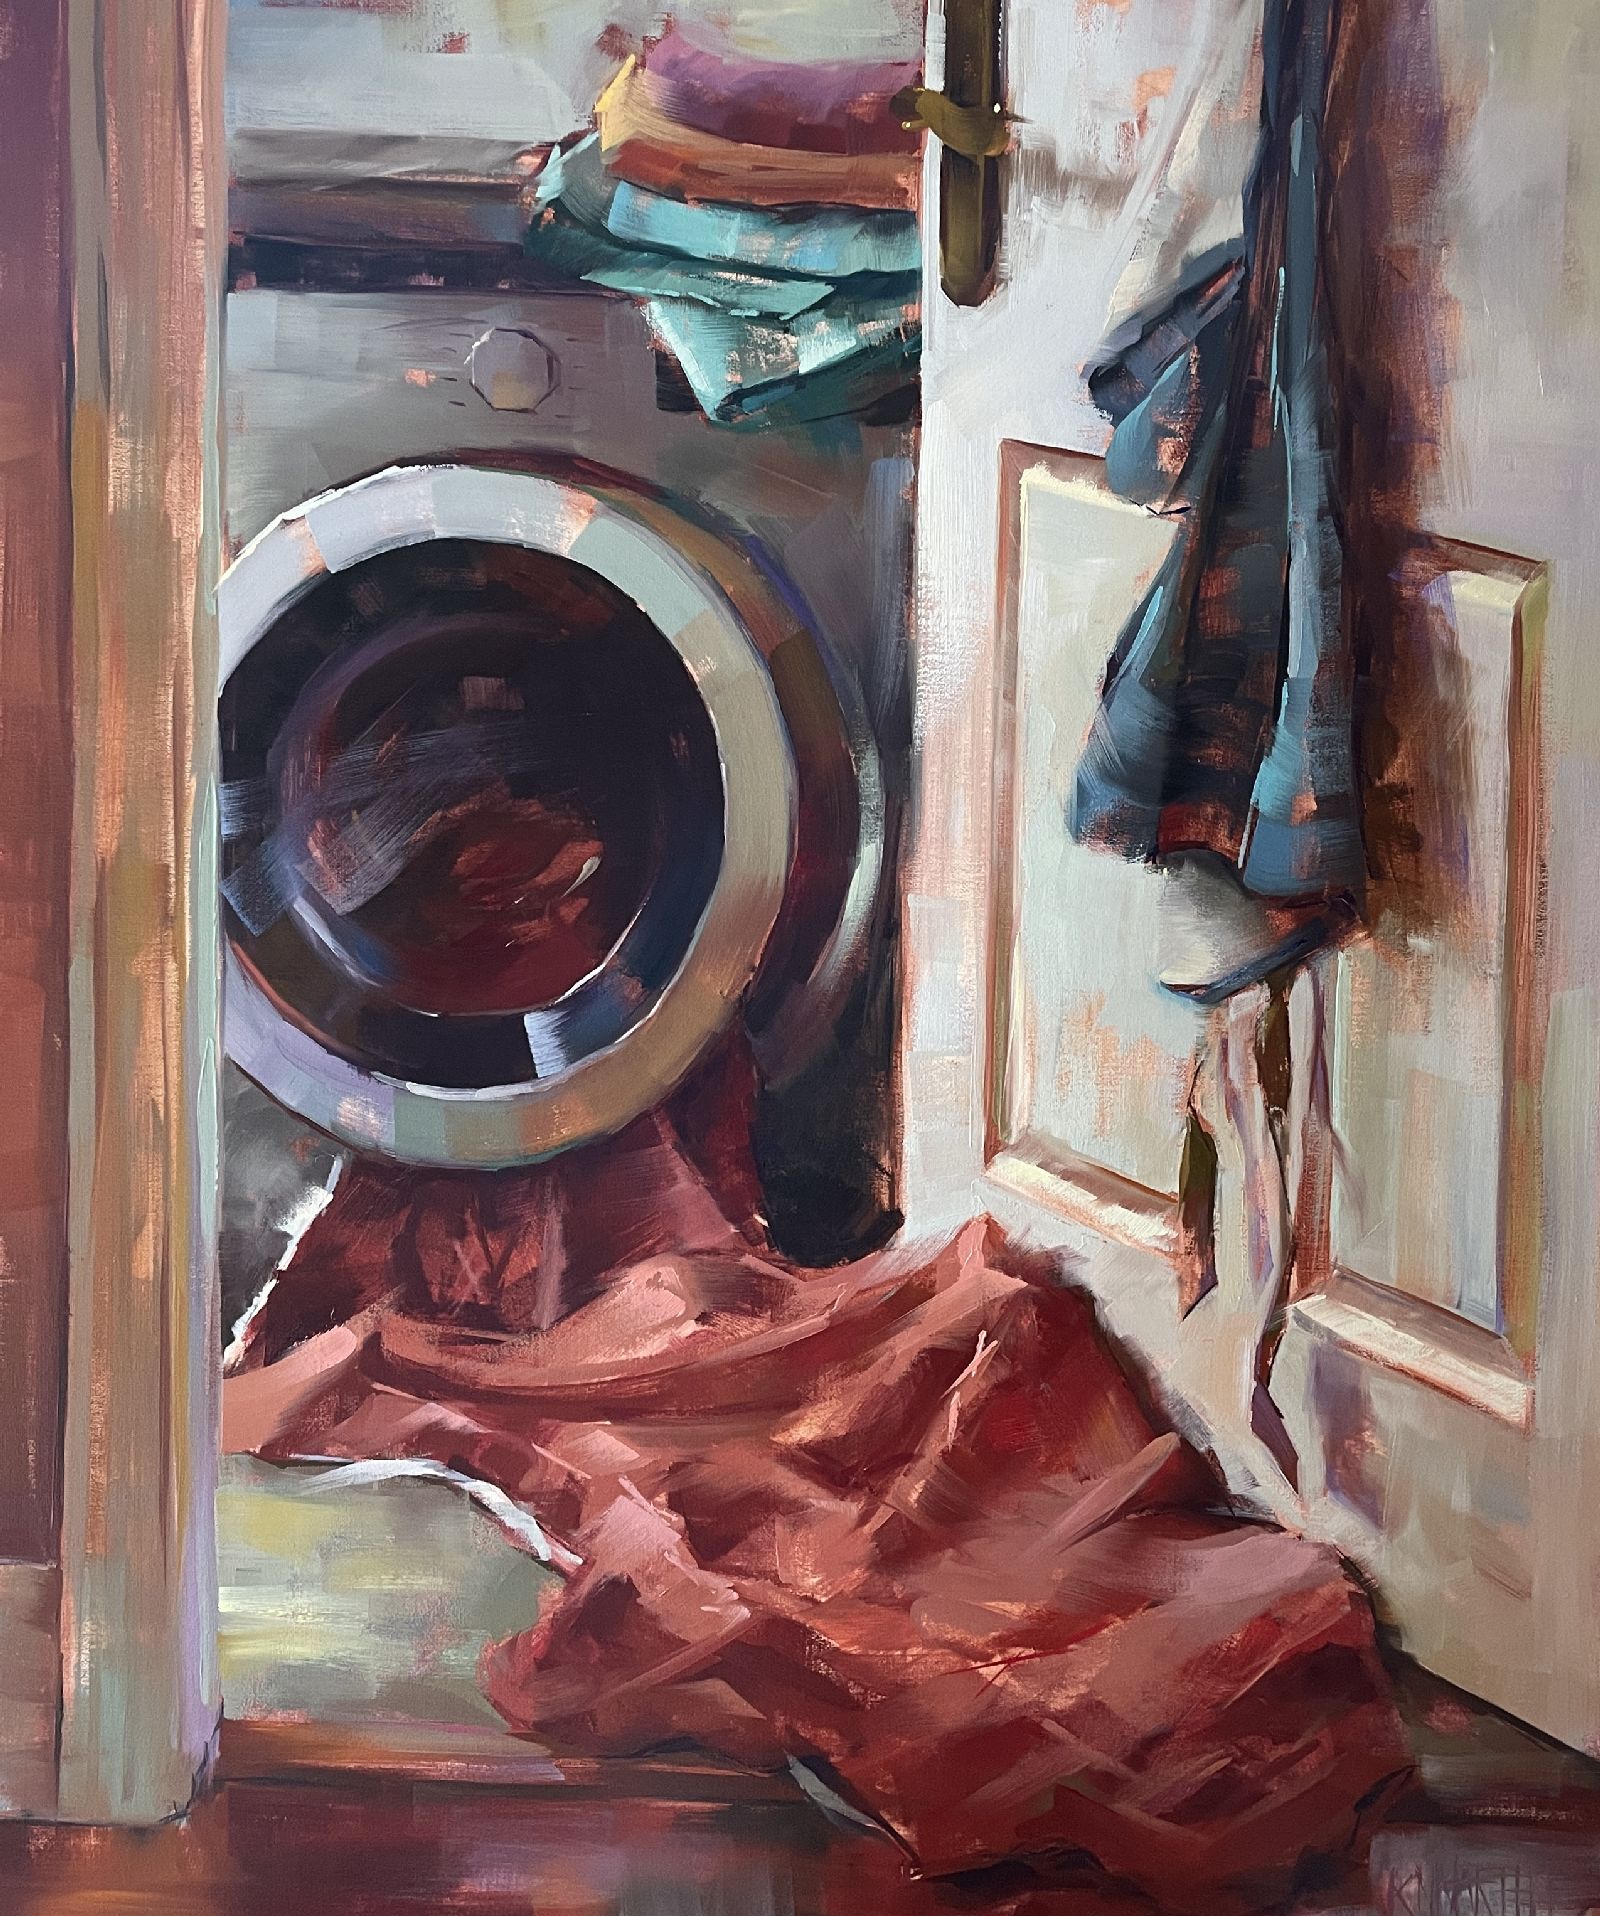 Morning Laundry by Kayla Martell